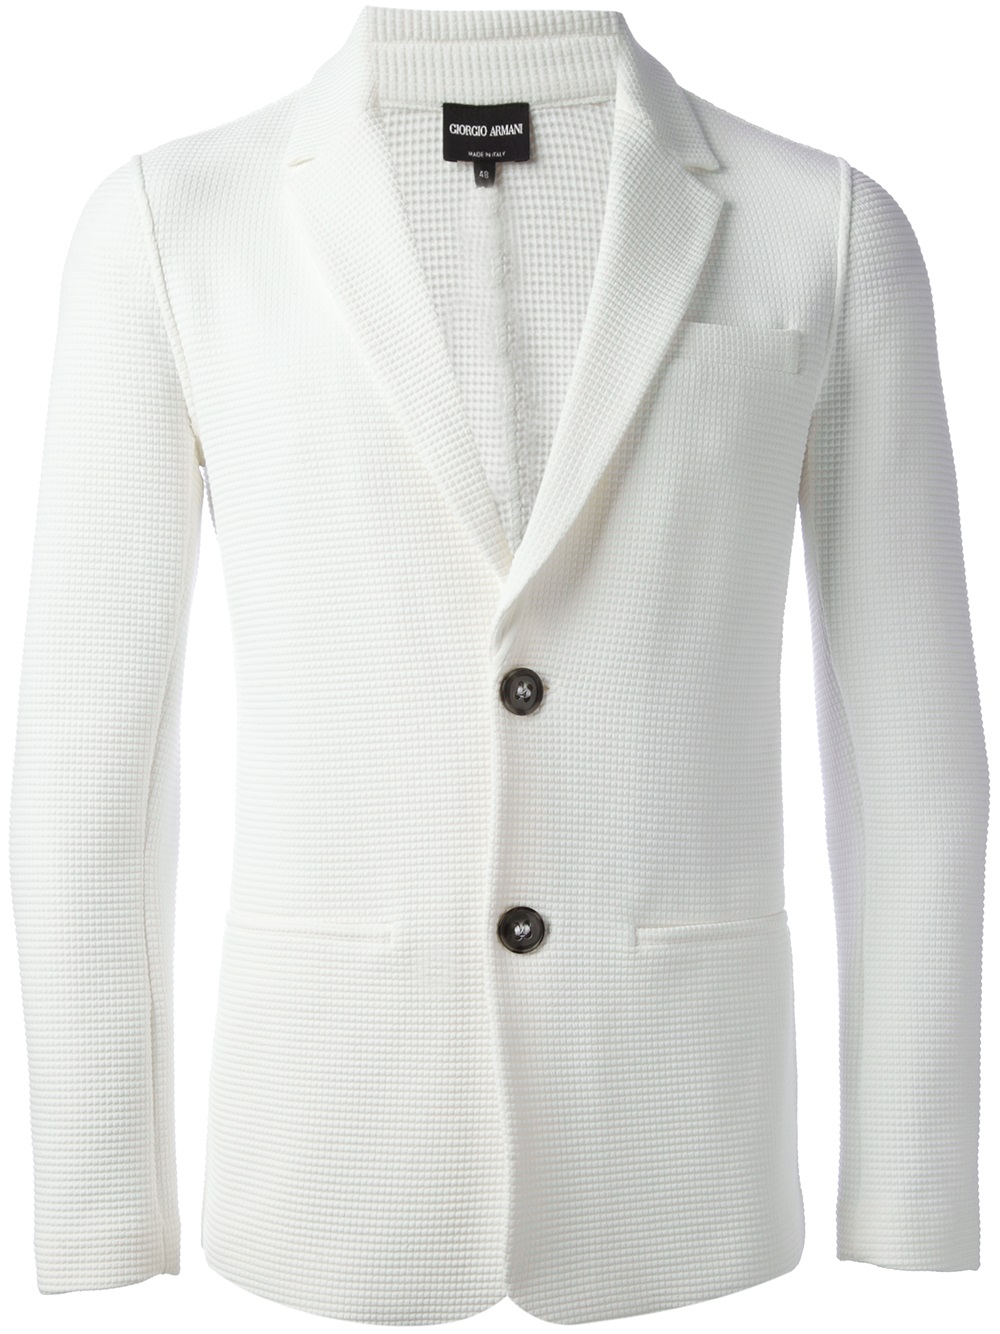 armani white coat